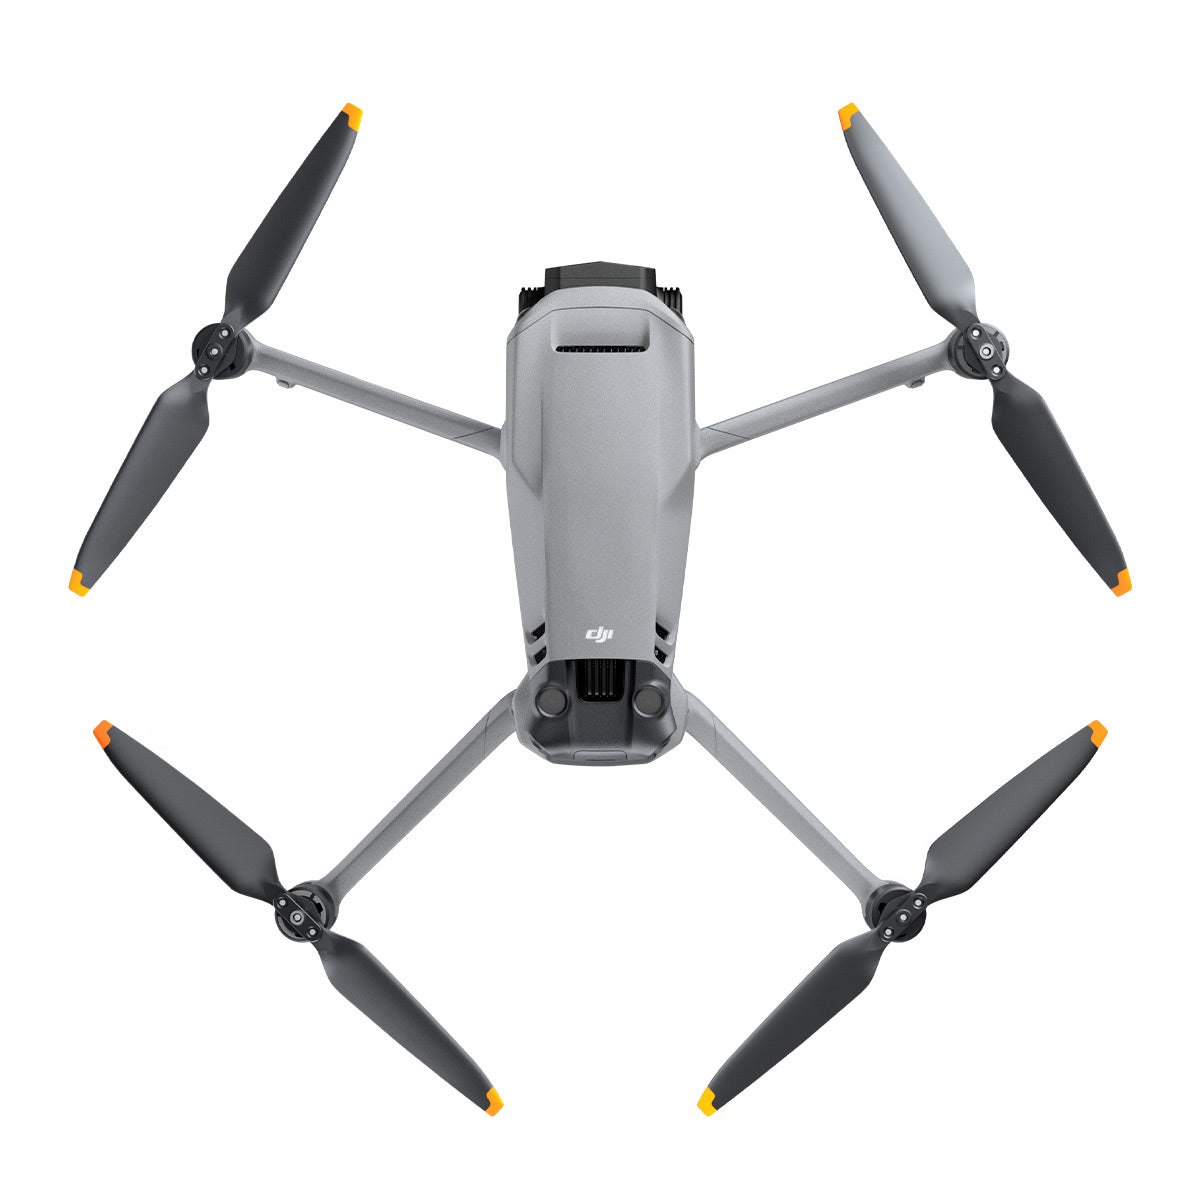 DJI Mavic 3 Pro Drone with RC Controller